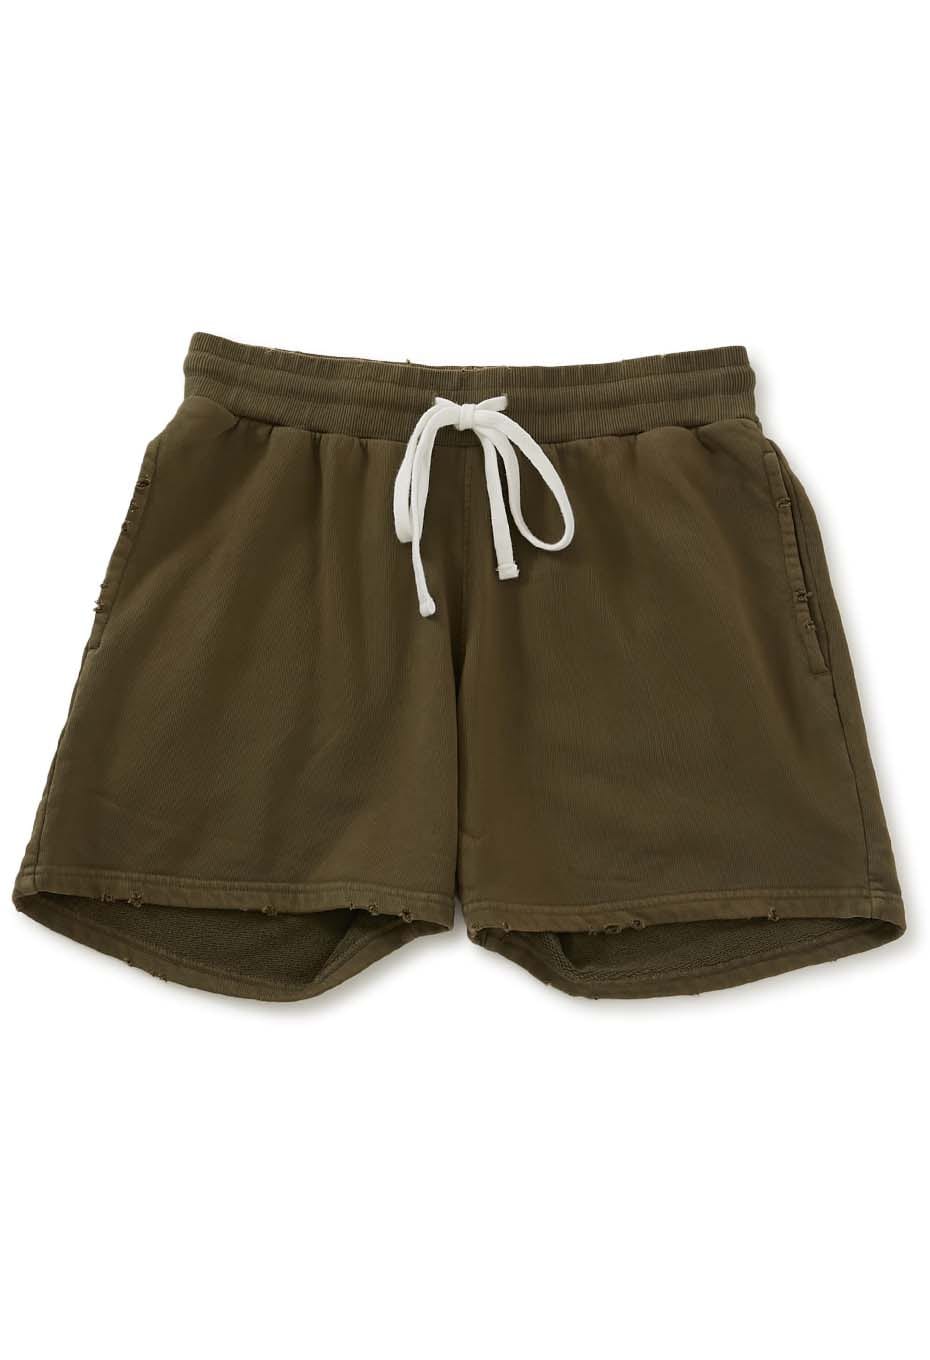 SWEET PANTS Urban prime shorts